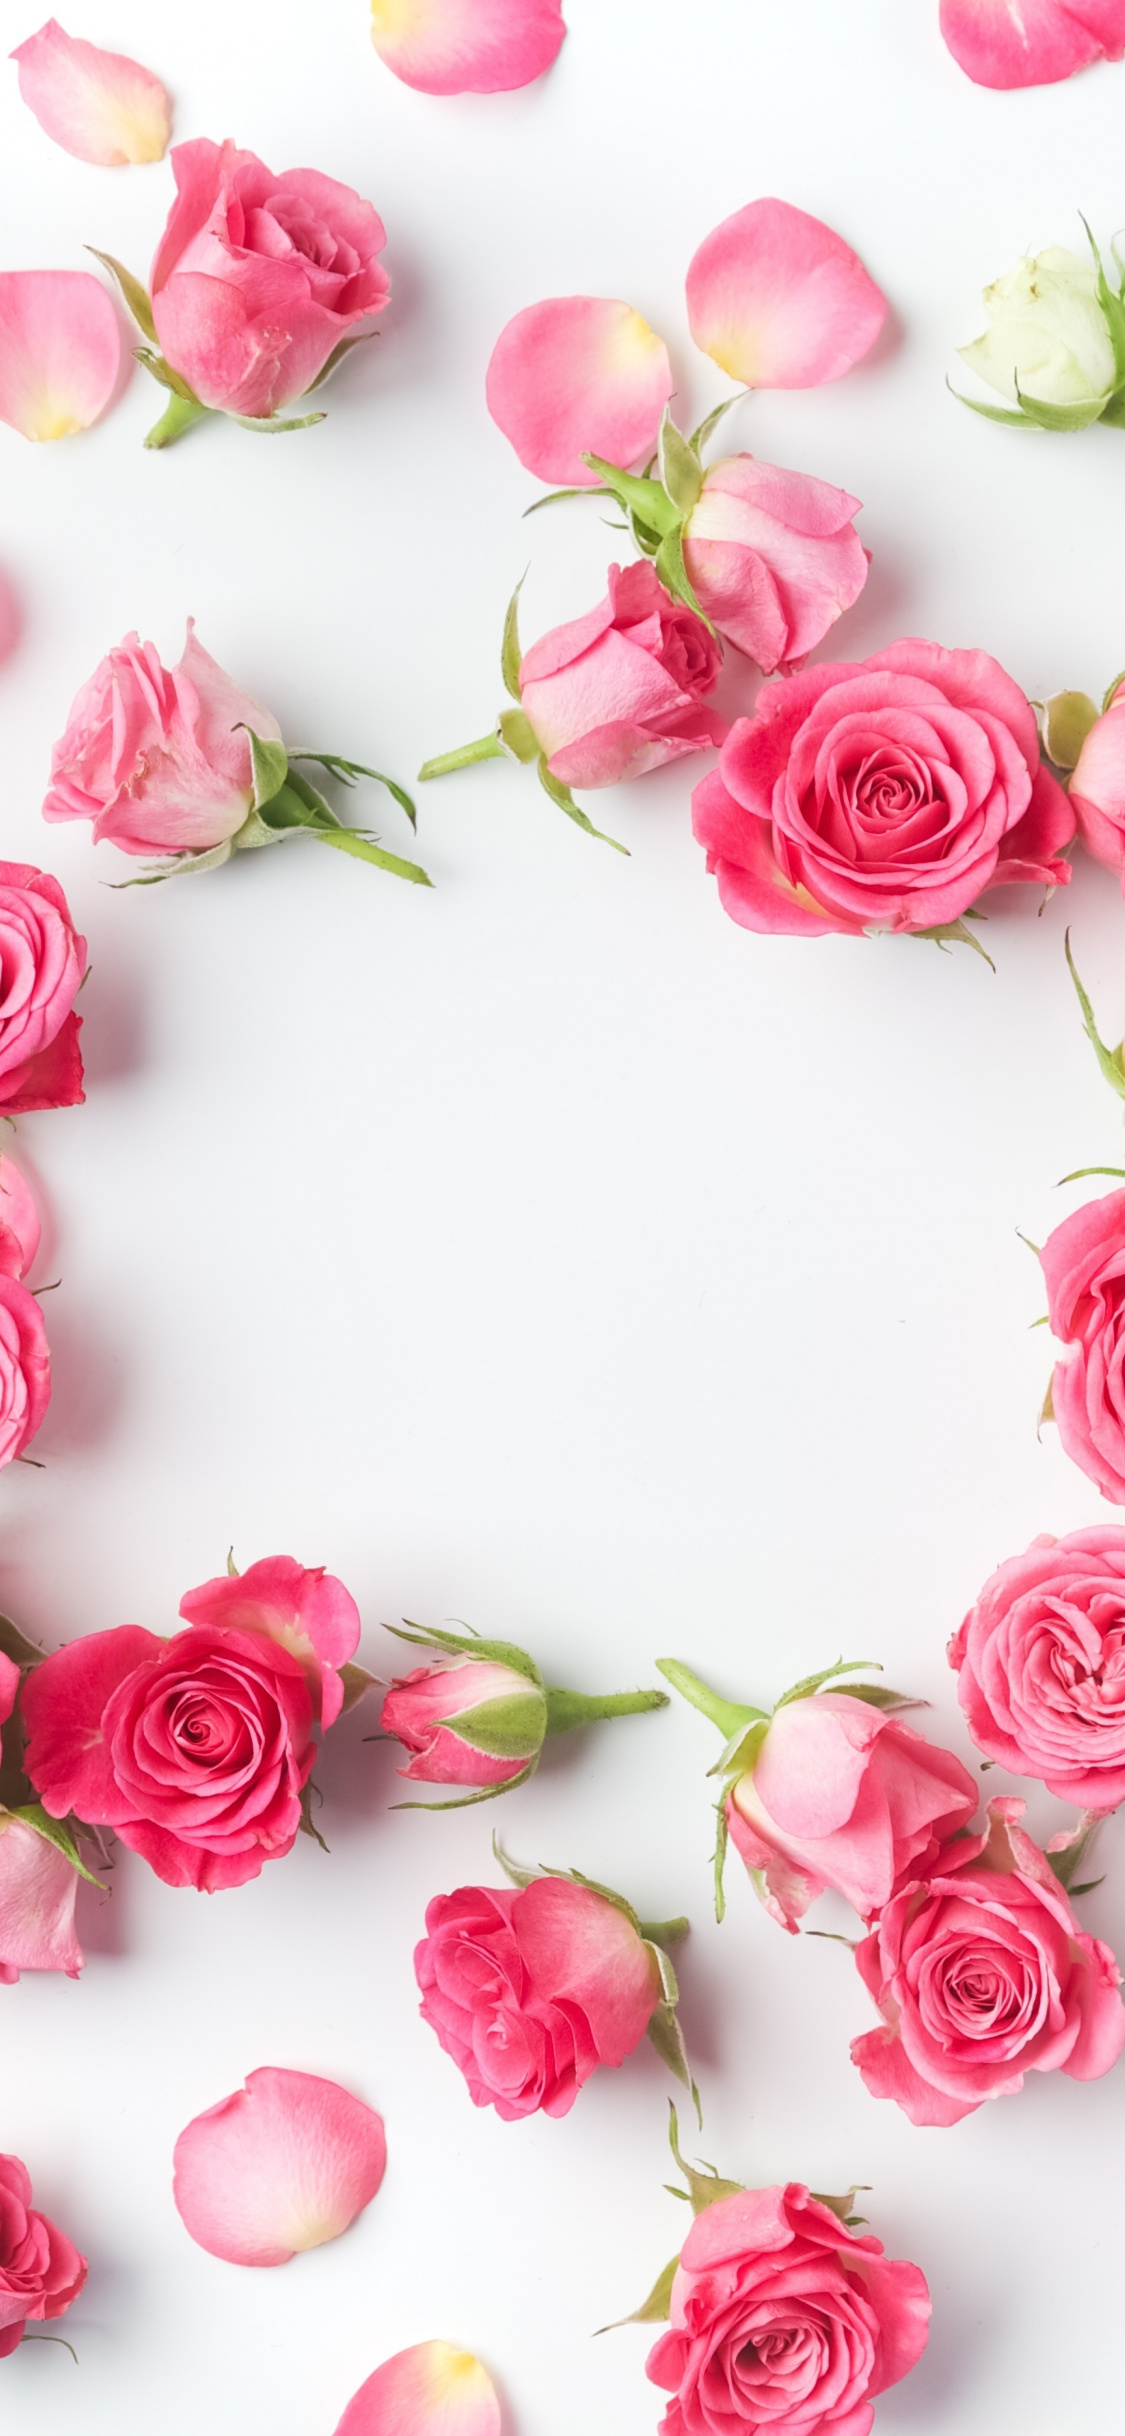 flor fondos de pantalla iphone,rosado,rosa,pétalo,flor,rosas de jardín